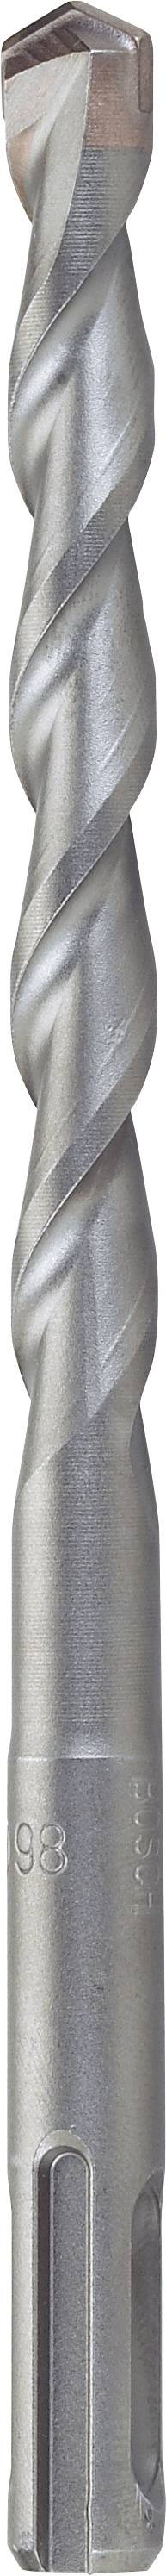 BOSCH Hartmetall Hammerbohrer 6 mm 2609255506 Gesamtlänge 110 mm SDS-Plus 1 St. (2609255506)